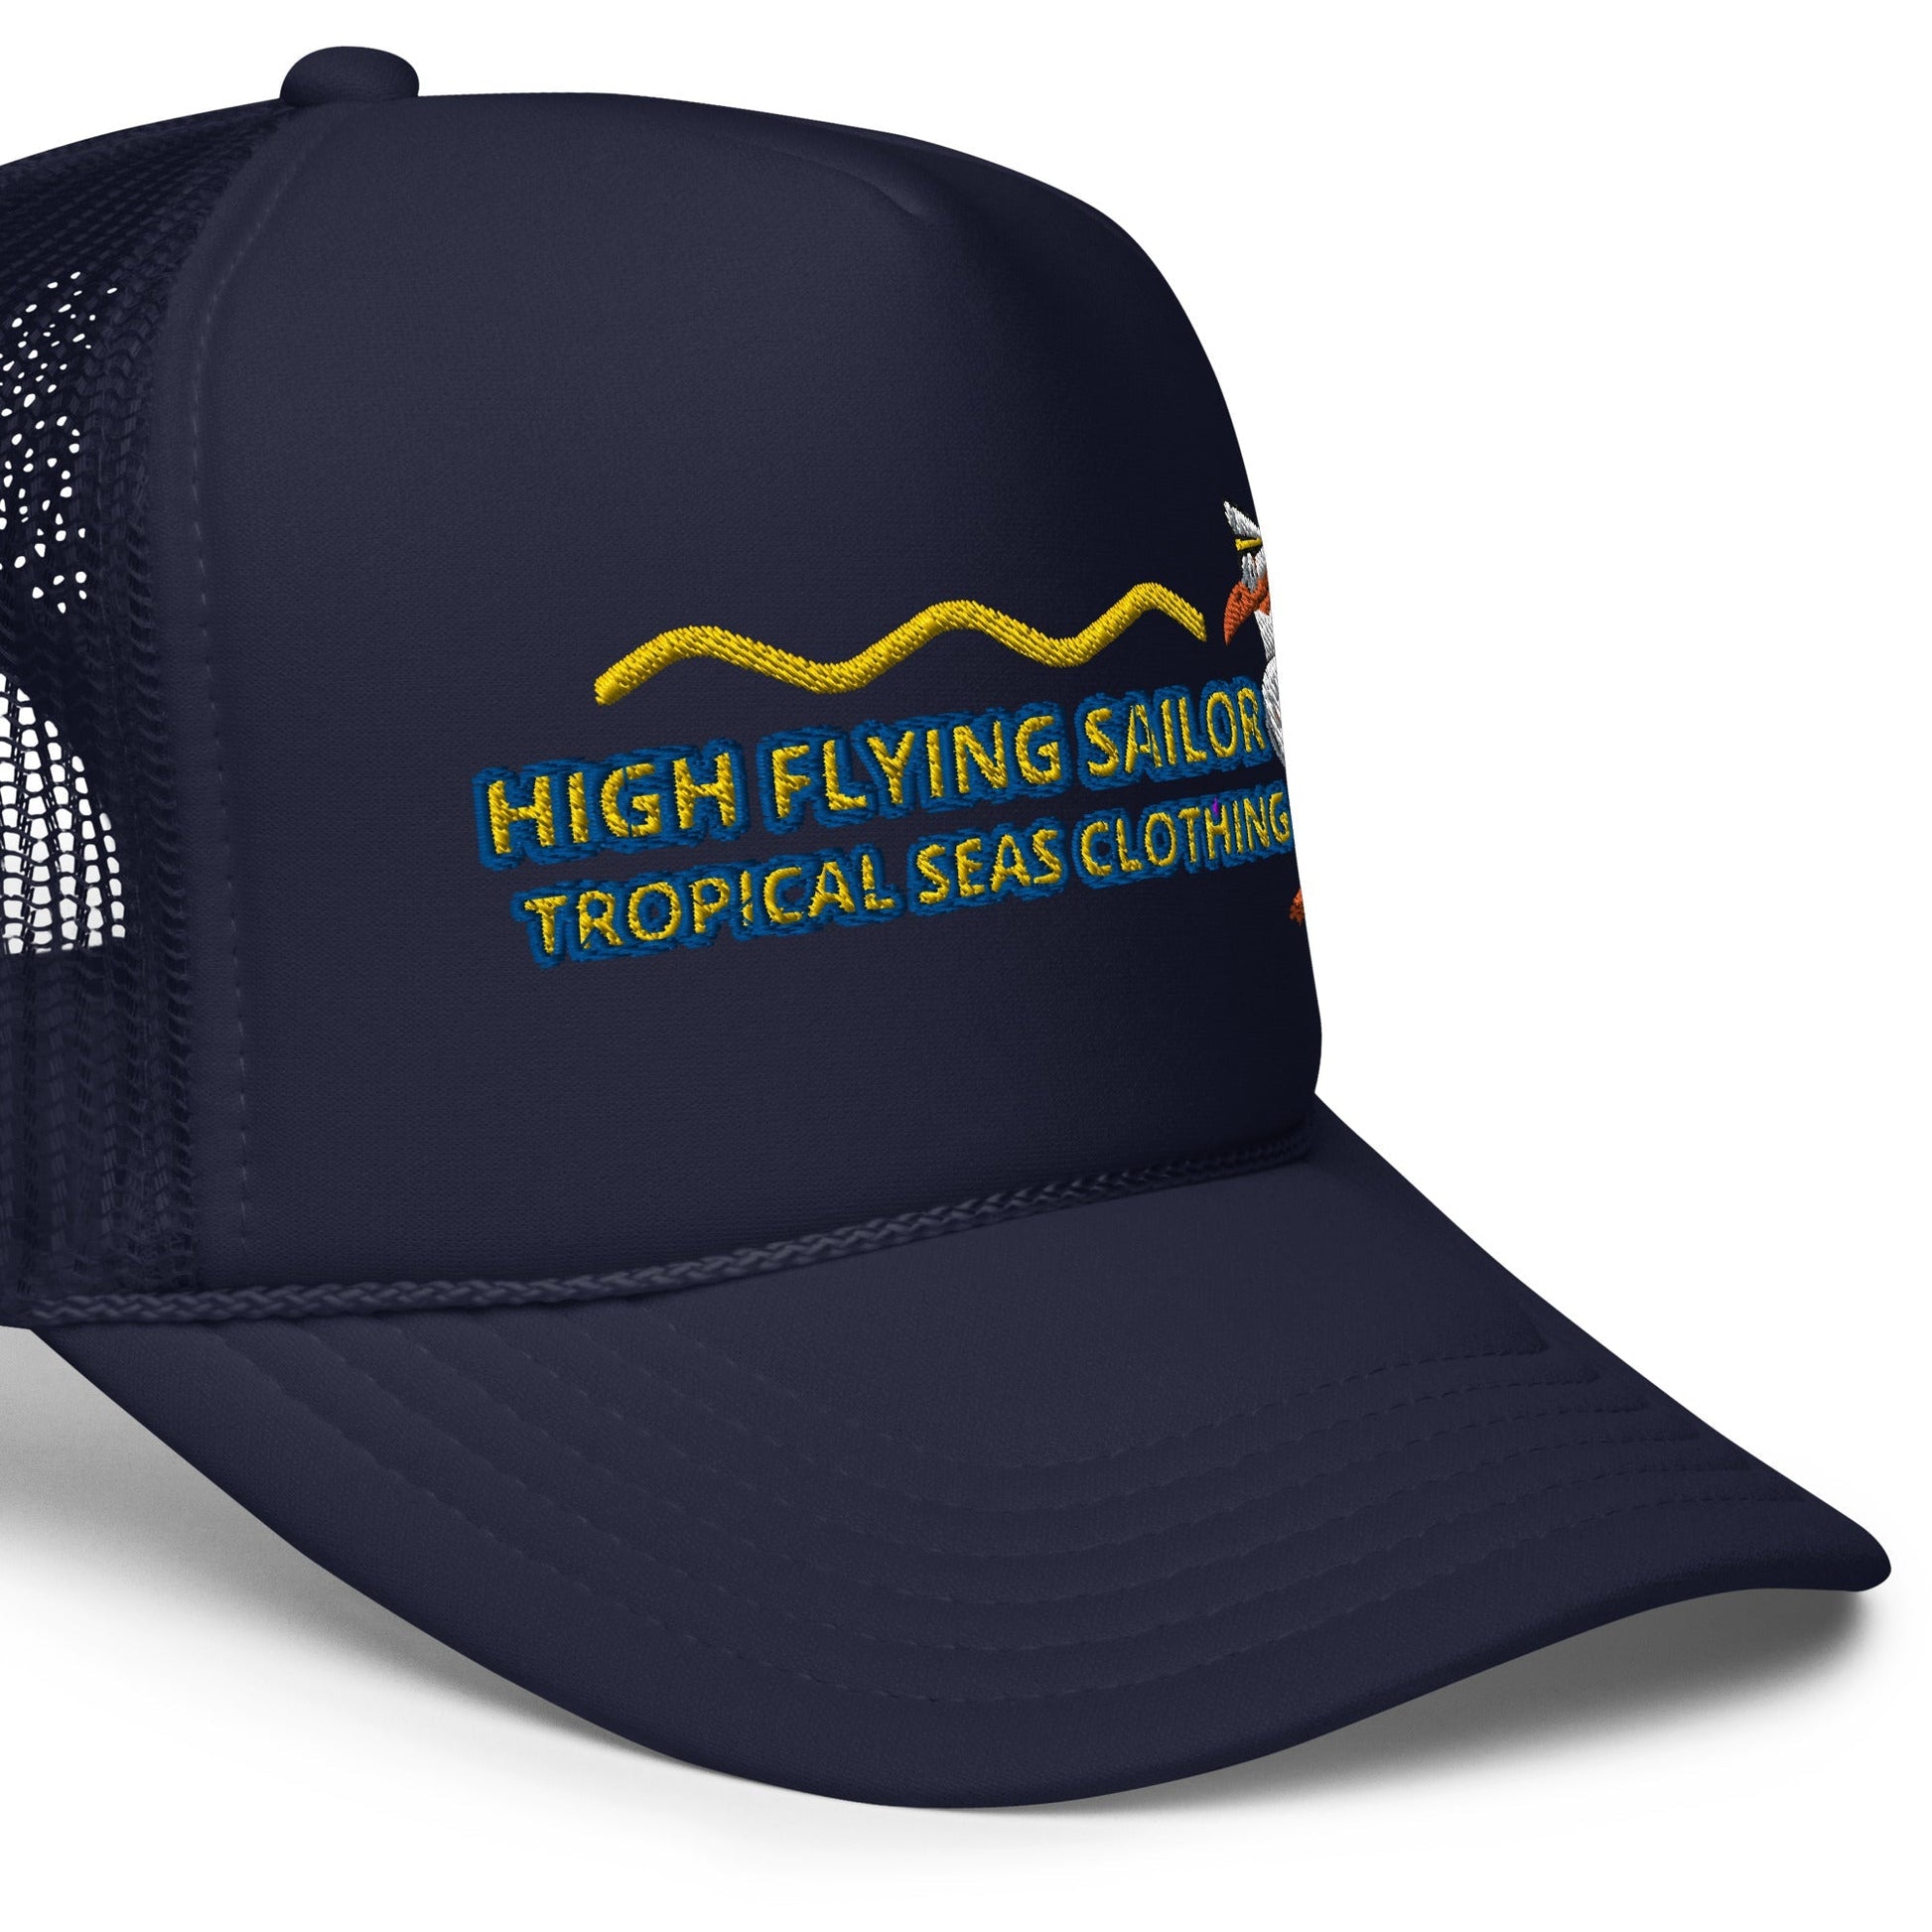 High Flying Sailor Foam trucker hat - Tropical Seas Clothing 